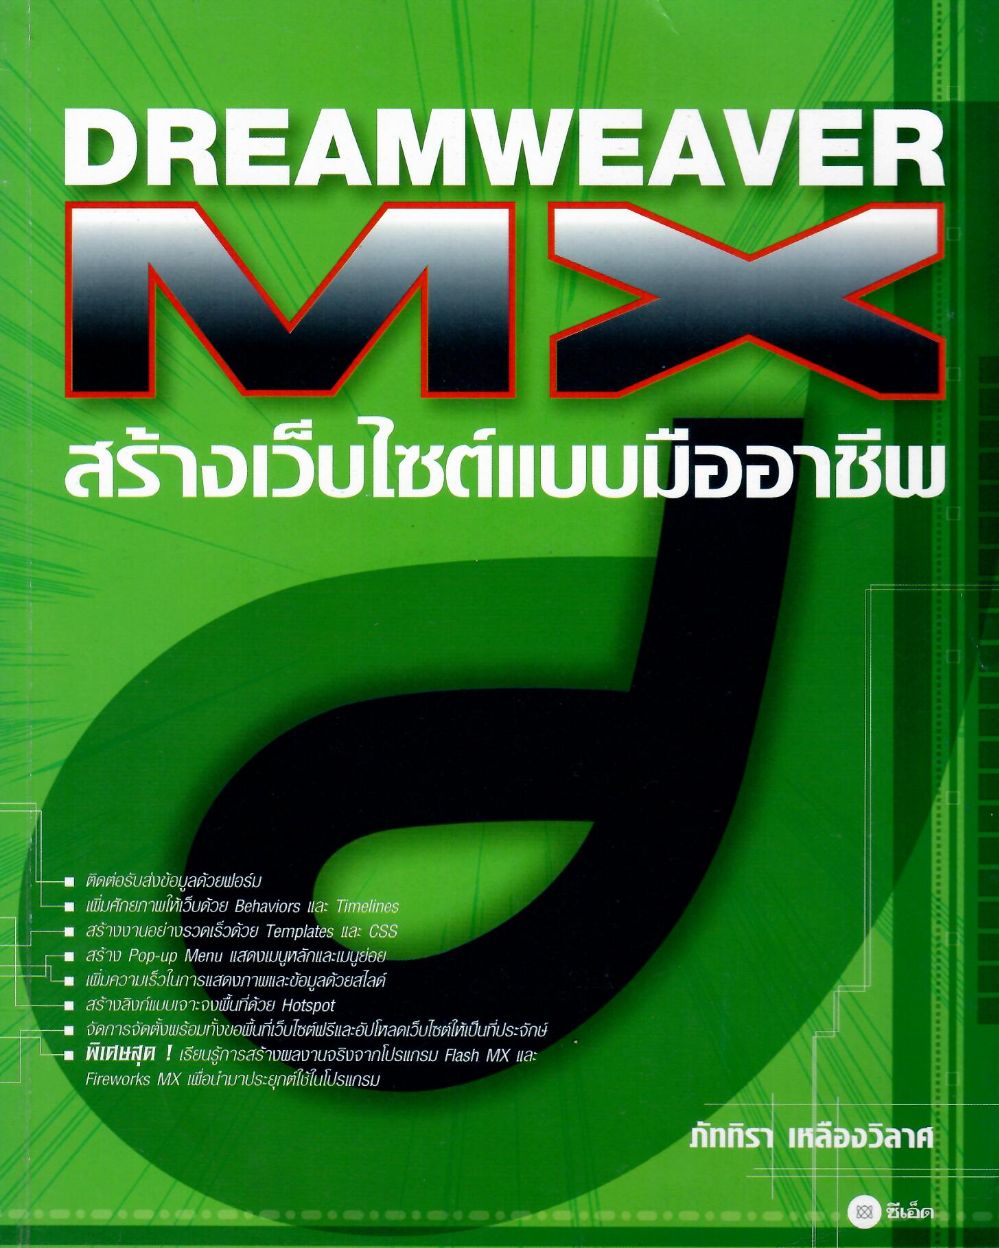 DREAMWEAVER MX สร้างเว็บไซต์แบบมืออาชีพ/ ภัททิรา เหลืองวิลาศ